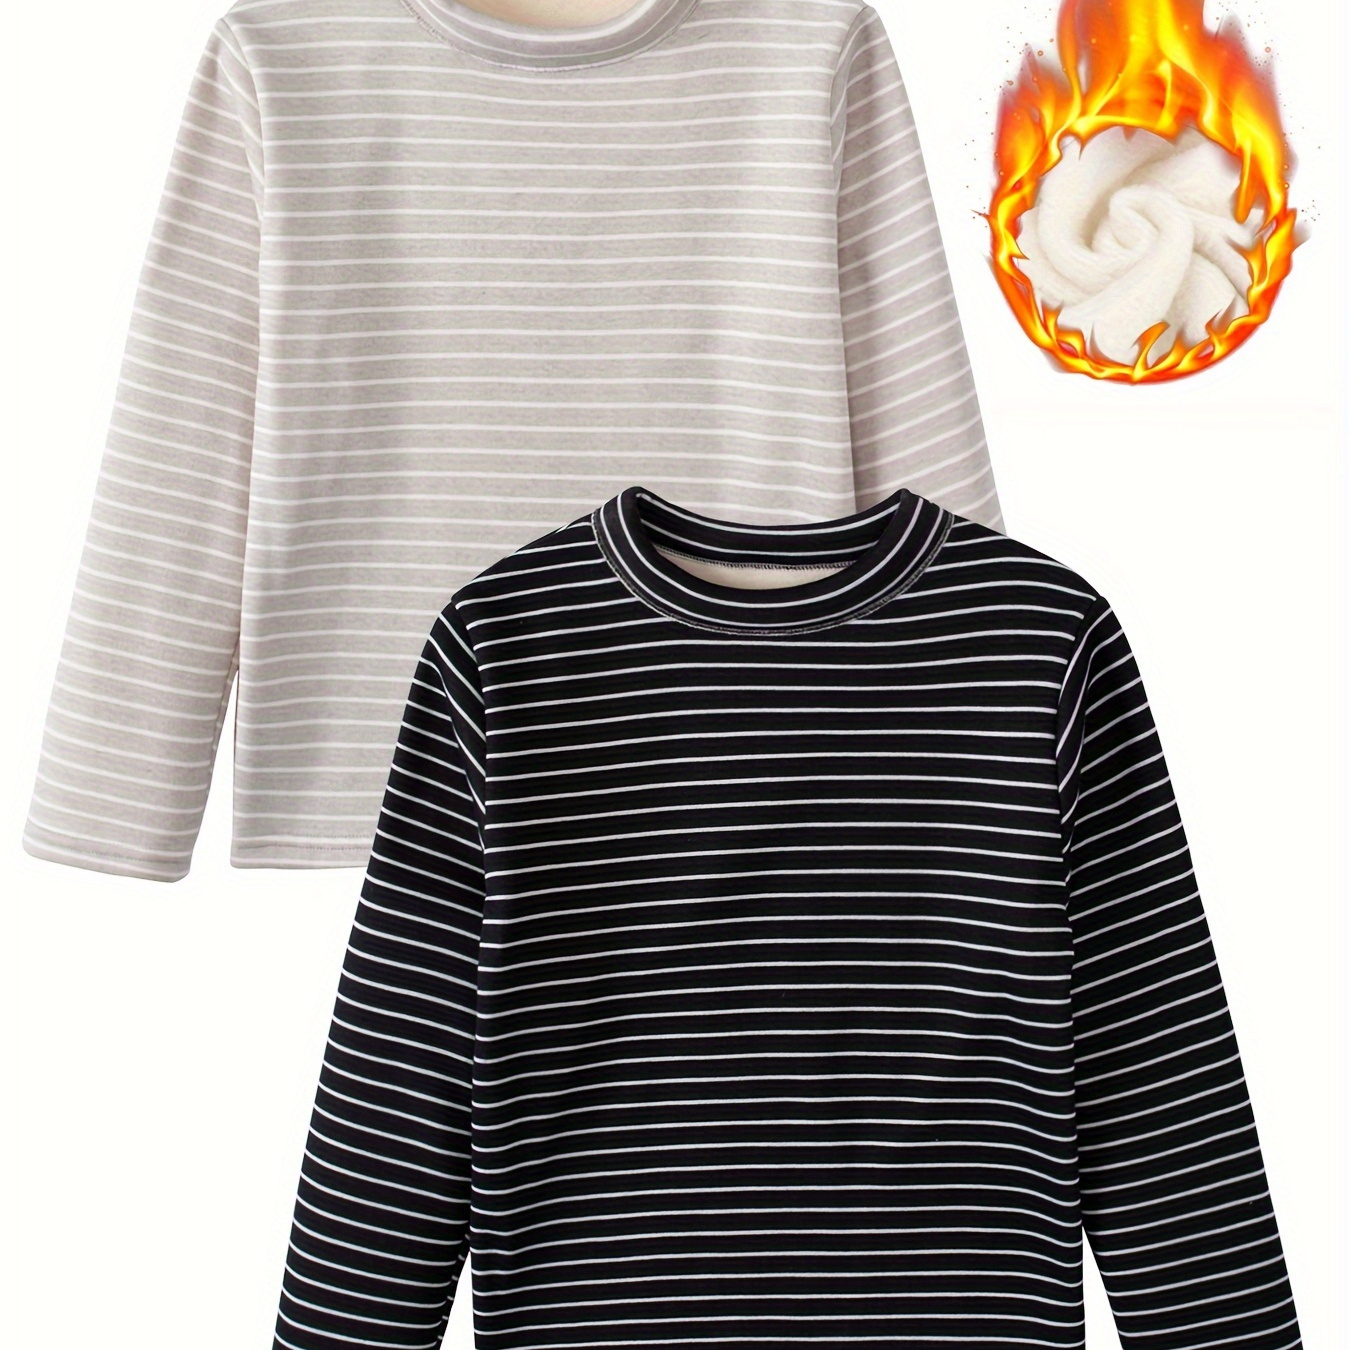 

2pcs Boy's Striped Baisc Thermal Warm Underwear T-shirt. Kids Lightweight Comfortable Base Layer Top